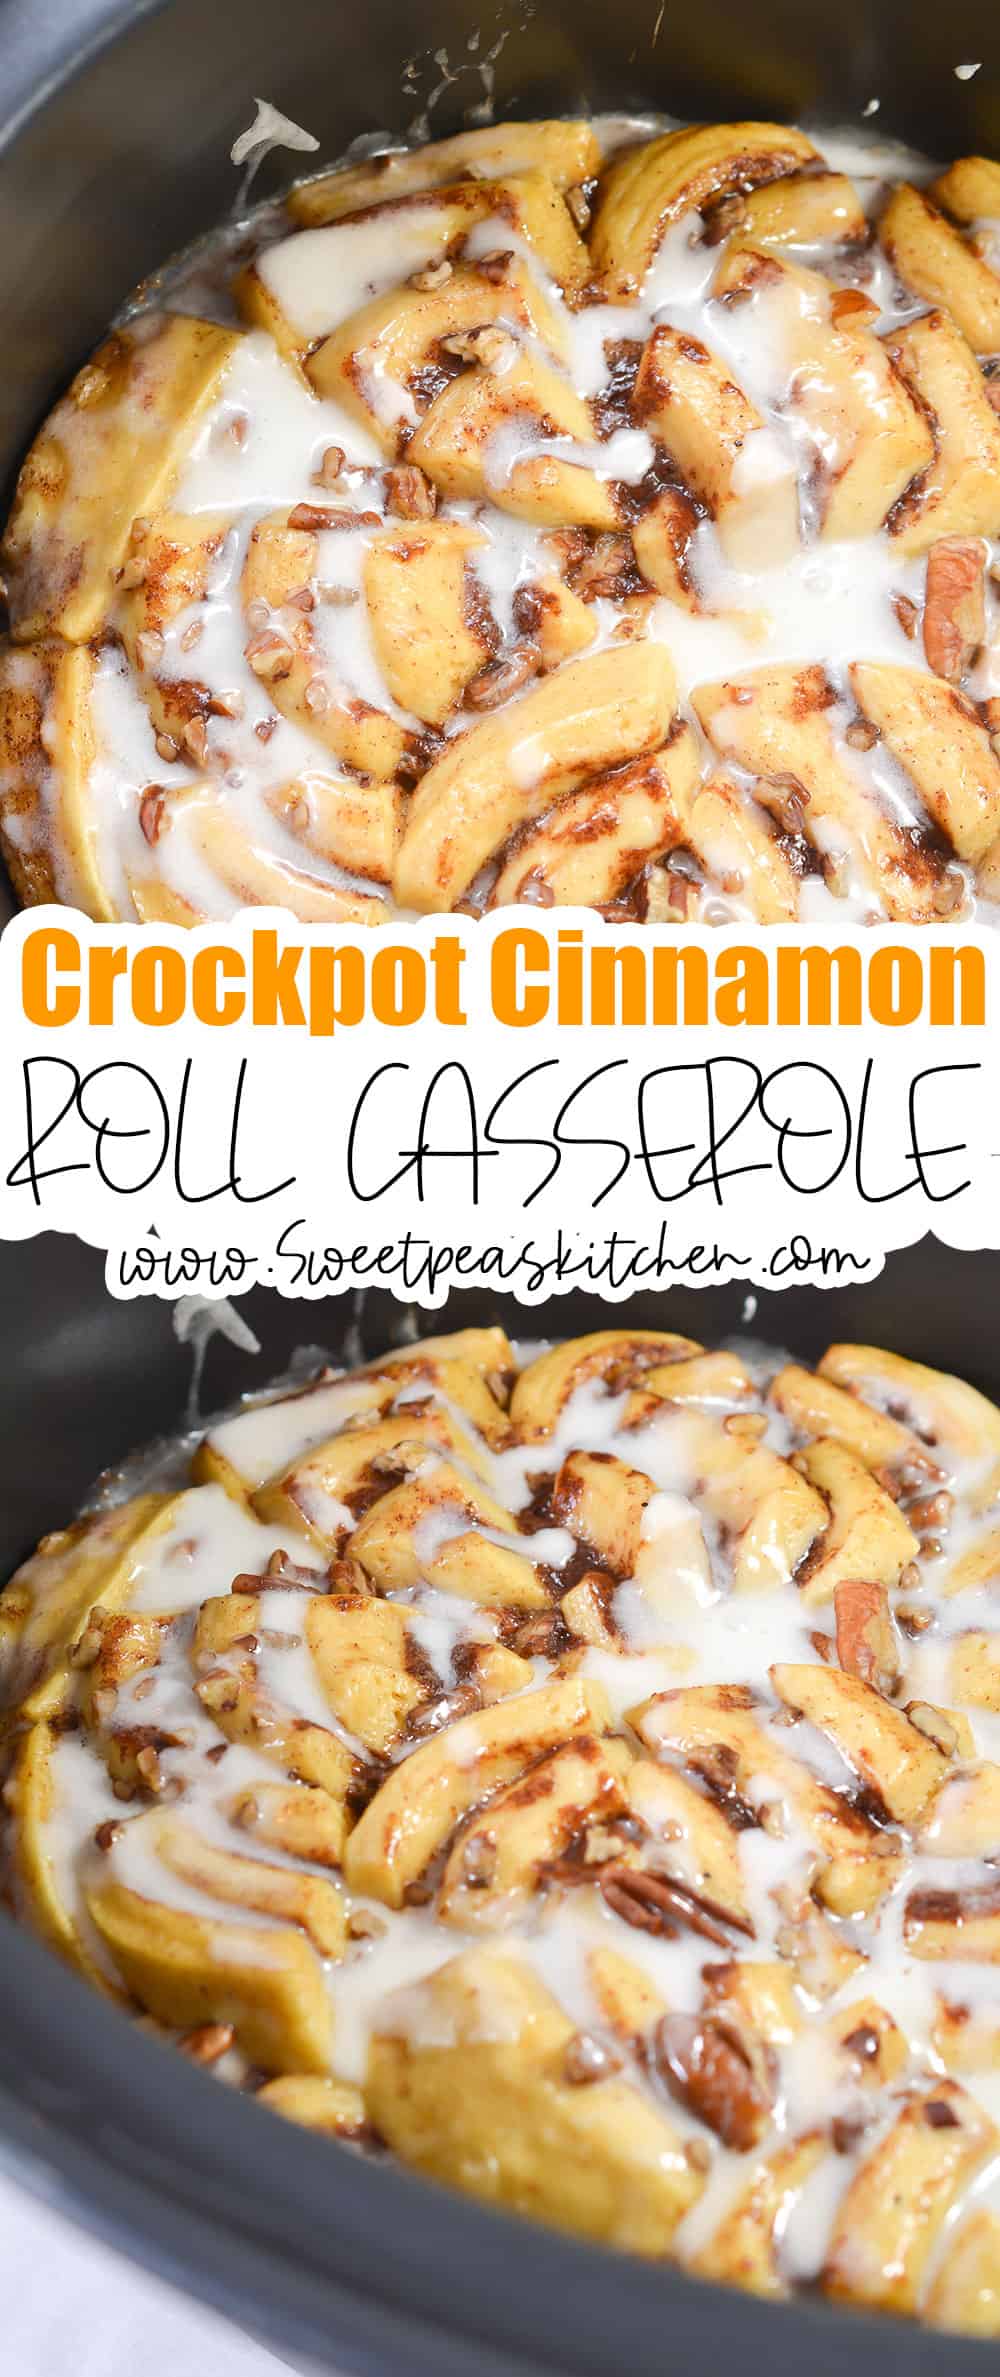 Crockpot Cinnamon Roll Casserole